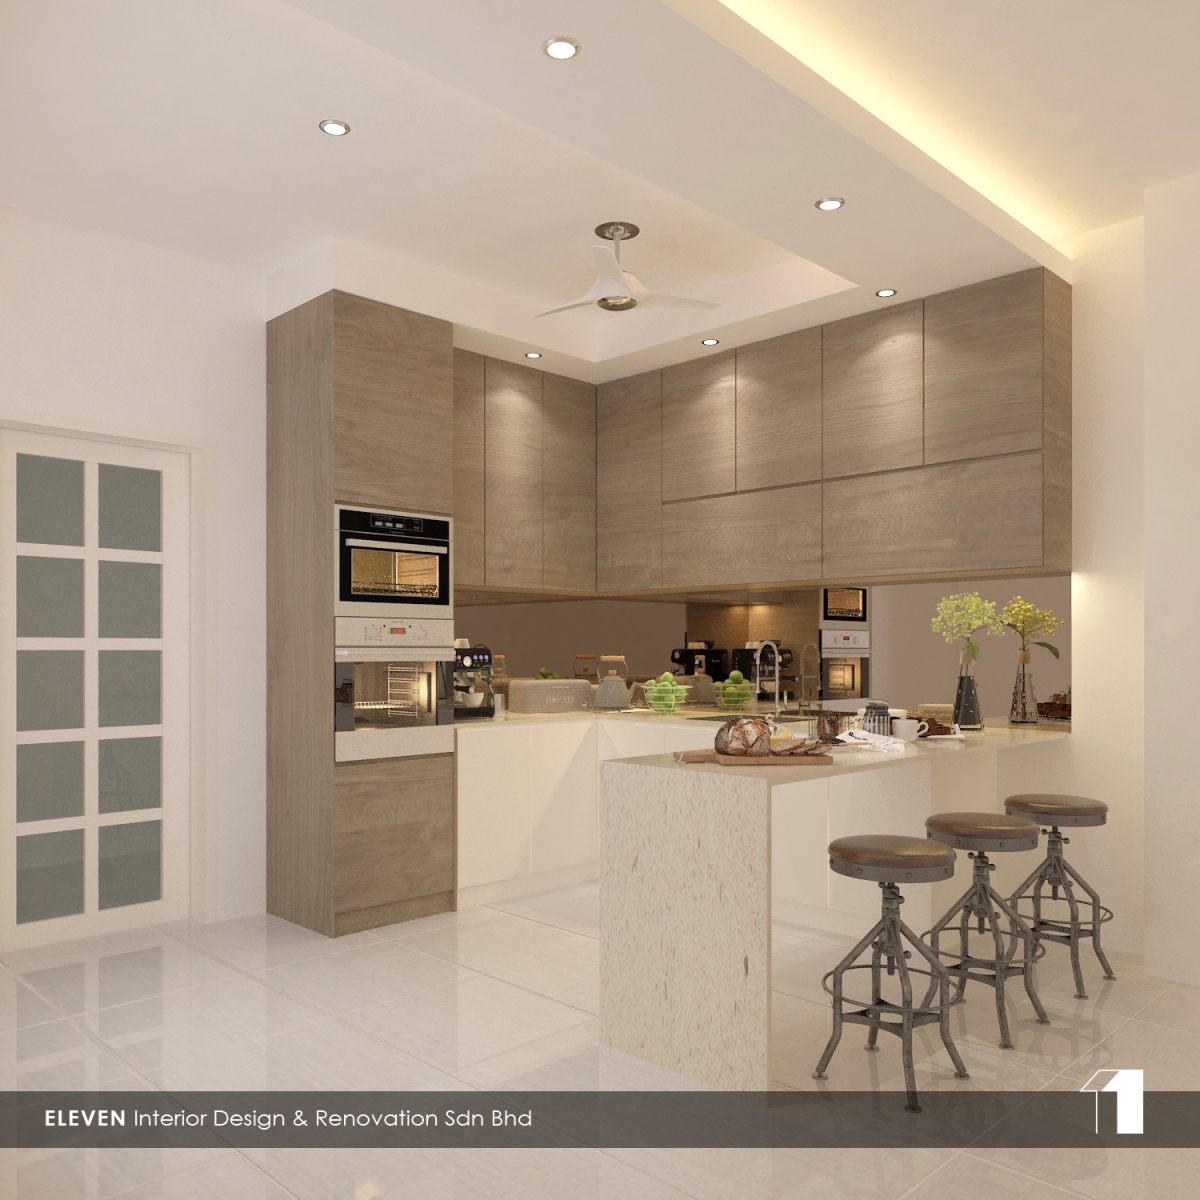 Eleven Interior Design Renovation Sdn Bhd Added New